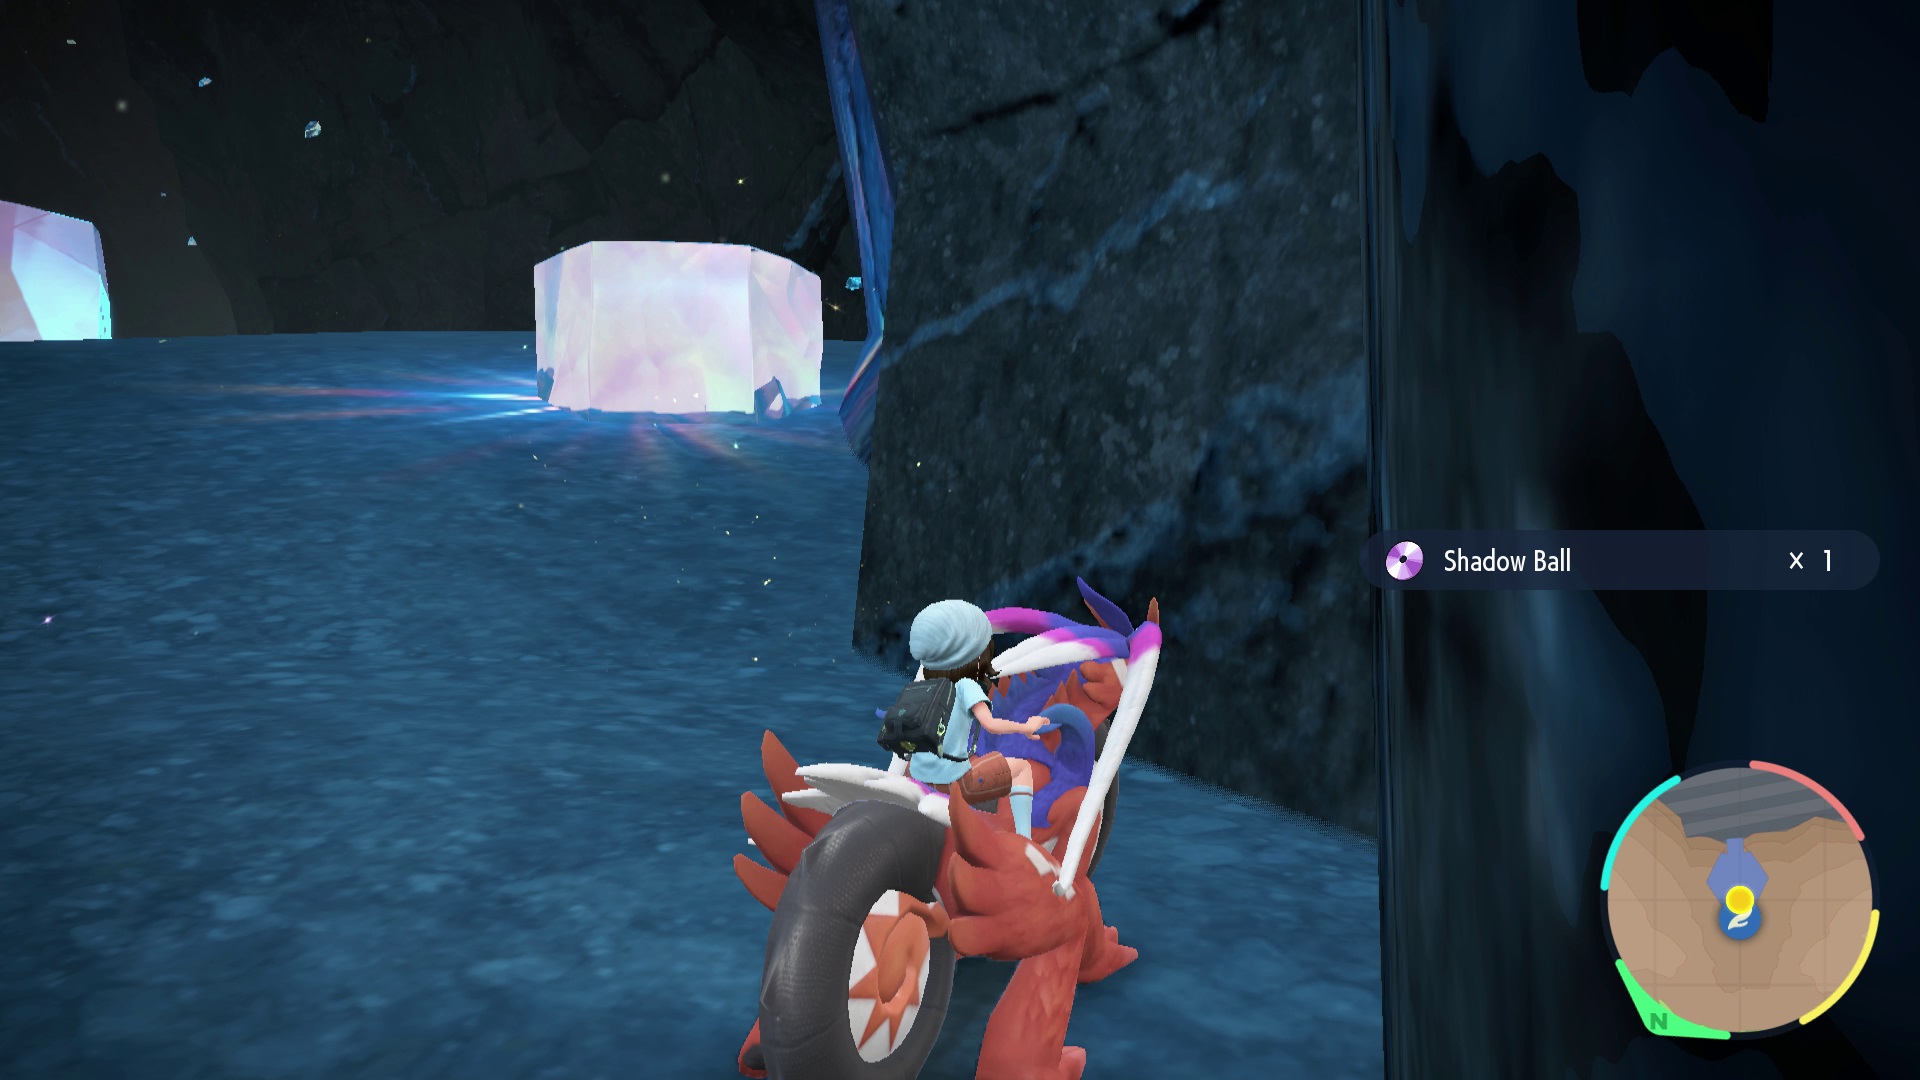 Shadow Ball TM location near Zero Lab in Pokémon Scarlet and Violet